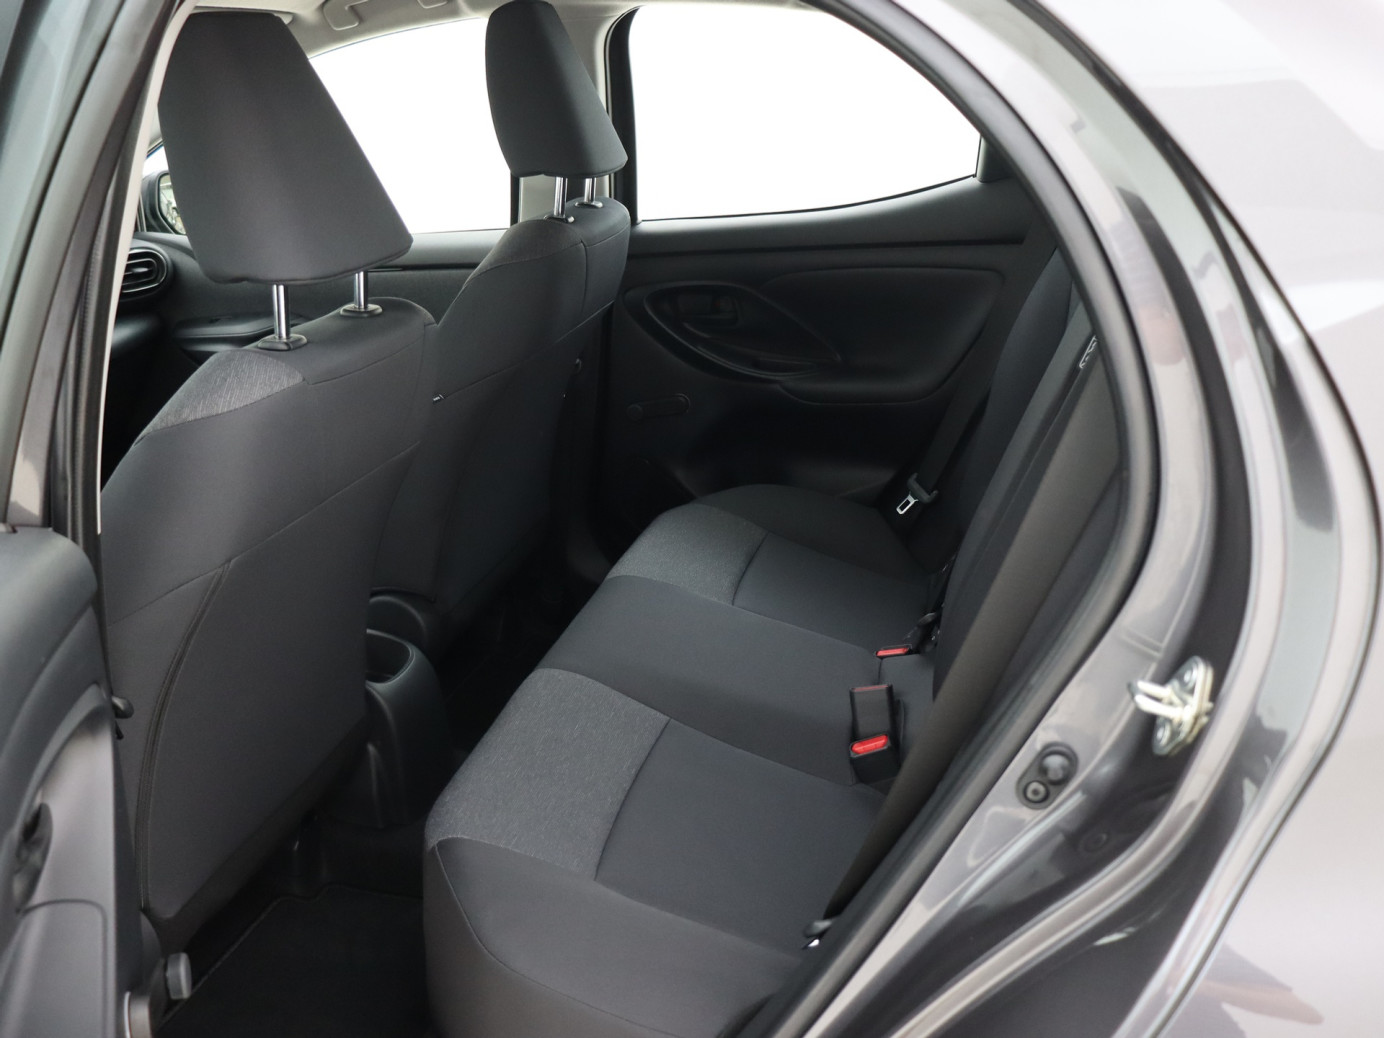 Toyota Yaris 1.0 Vvt-I Comfort 2020 Grijs Occasion